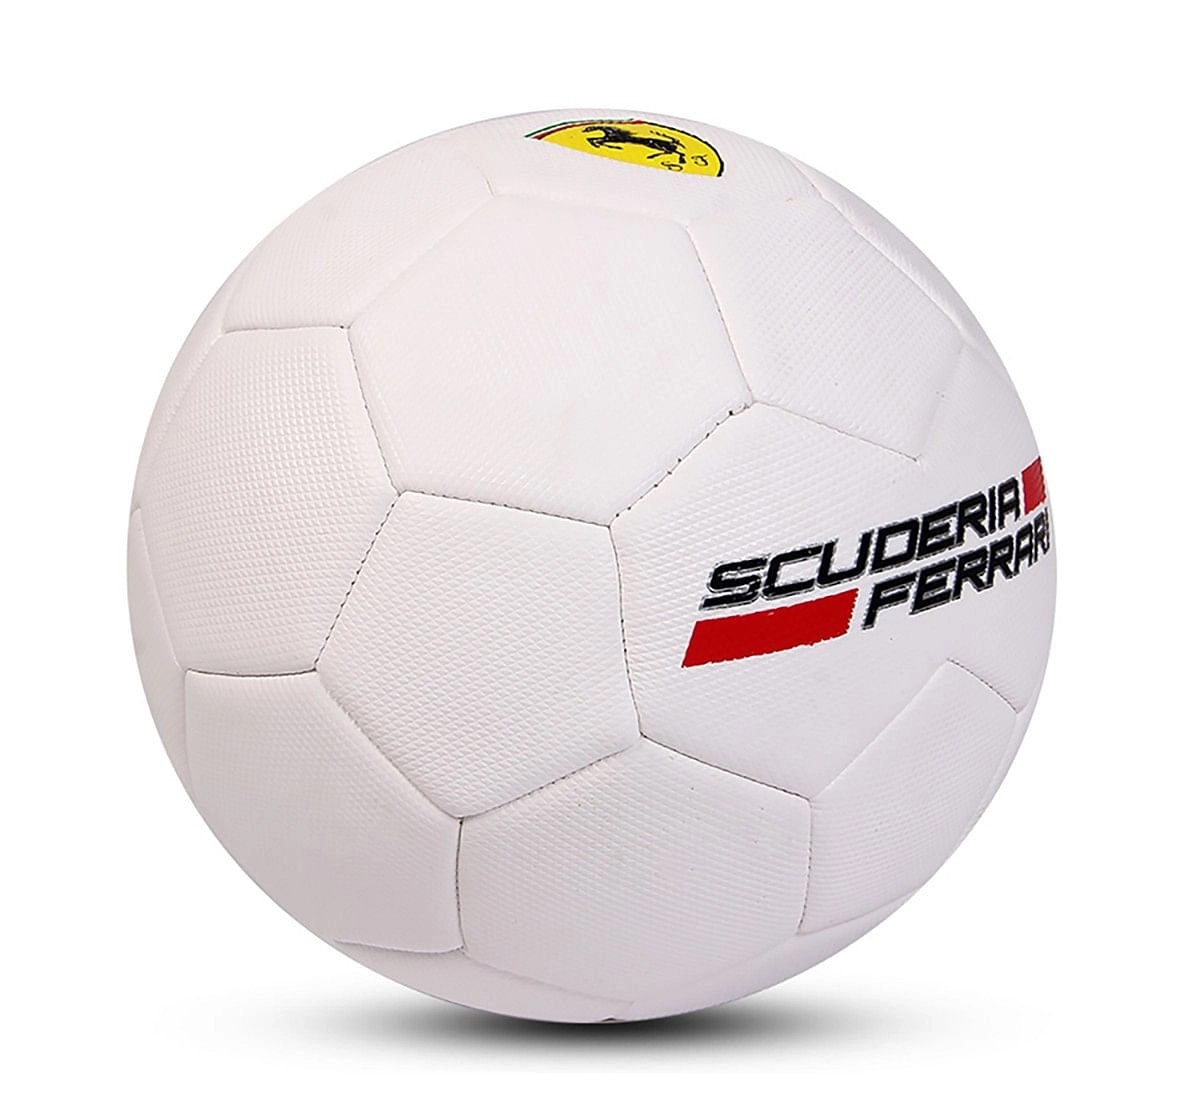 Ferrari Soccer Ball - Sports & Accessories for Kids age 5Y+ (White)